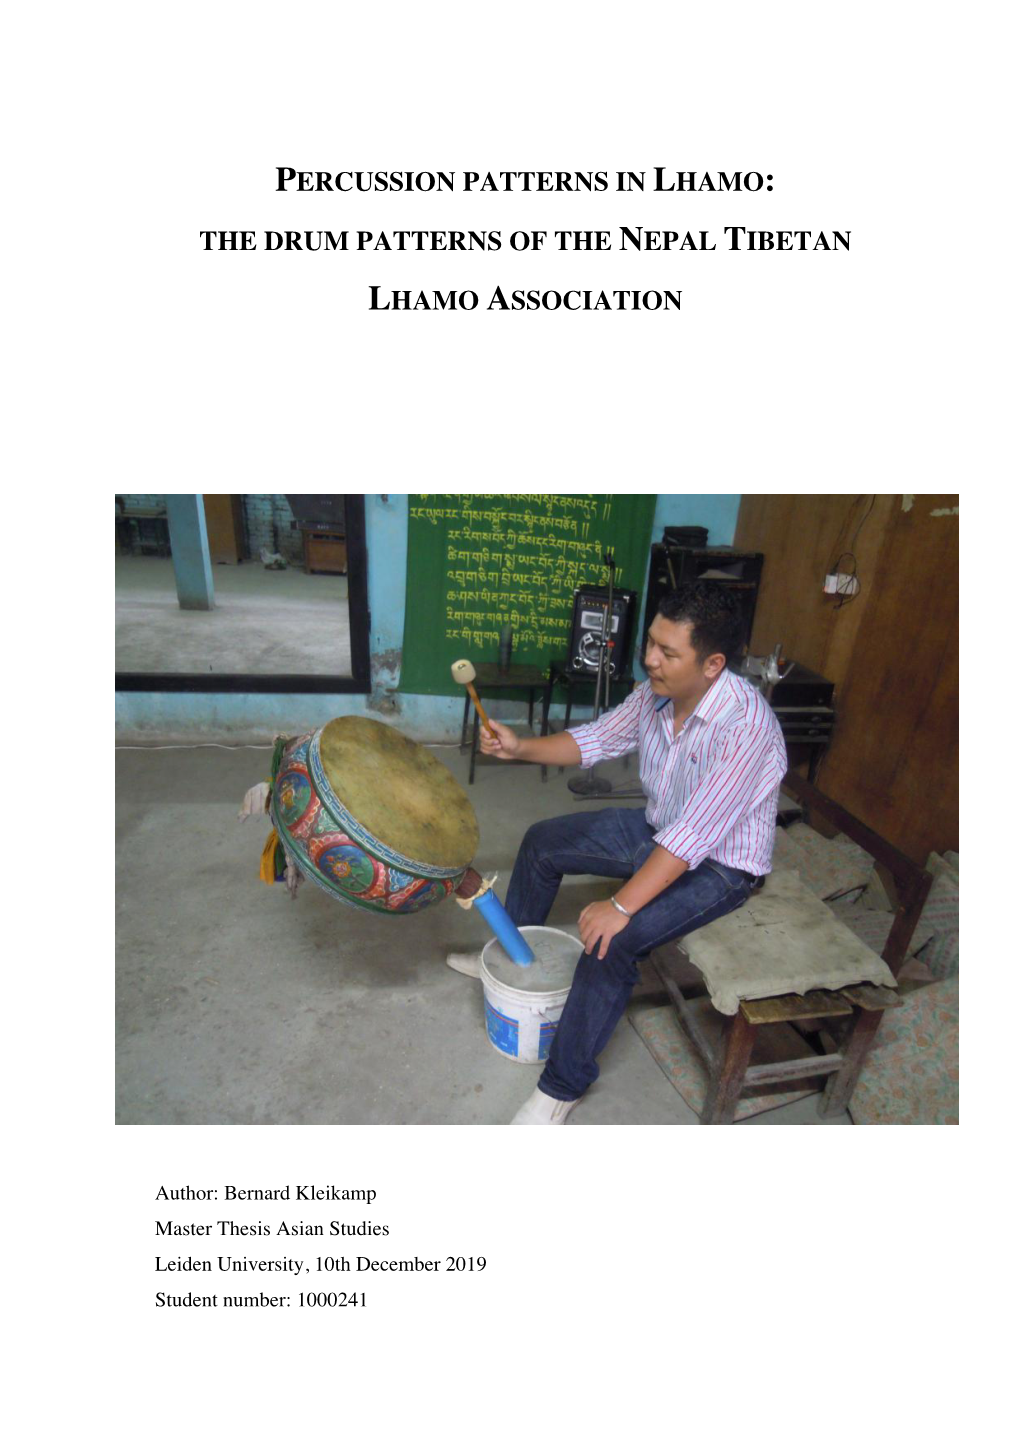 The Drum Patterns of the Nepal Tibetan Lhamo Association